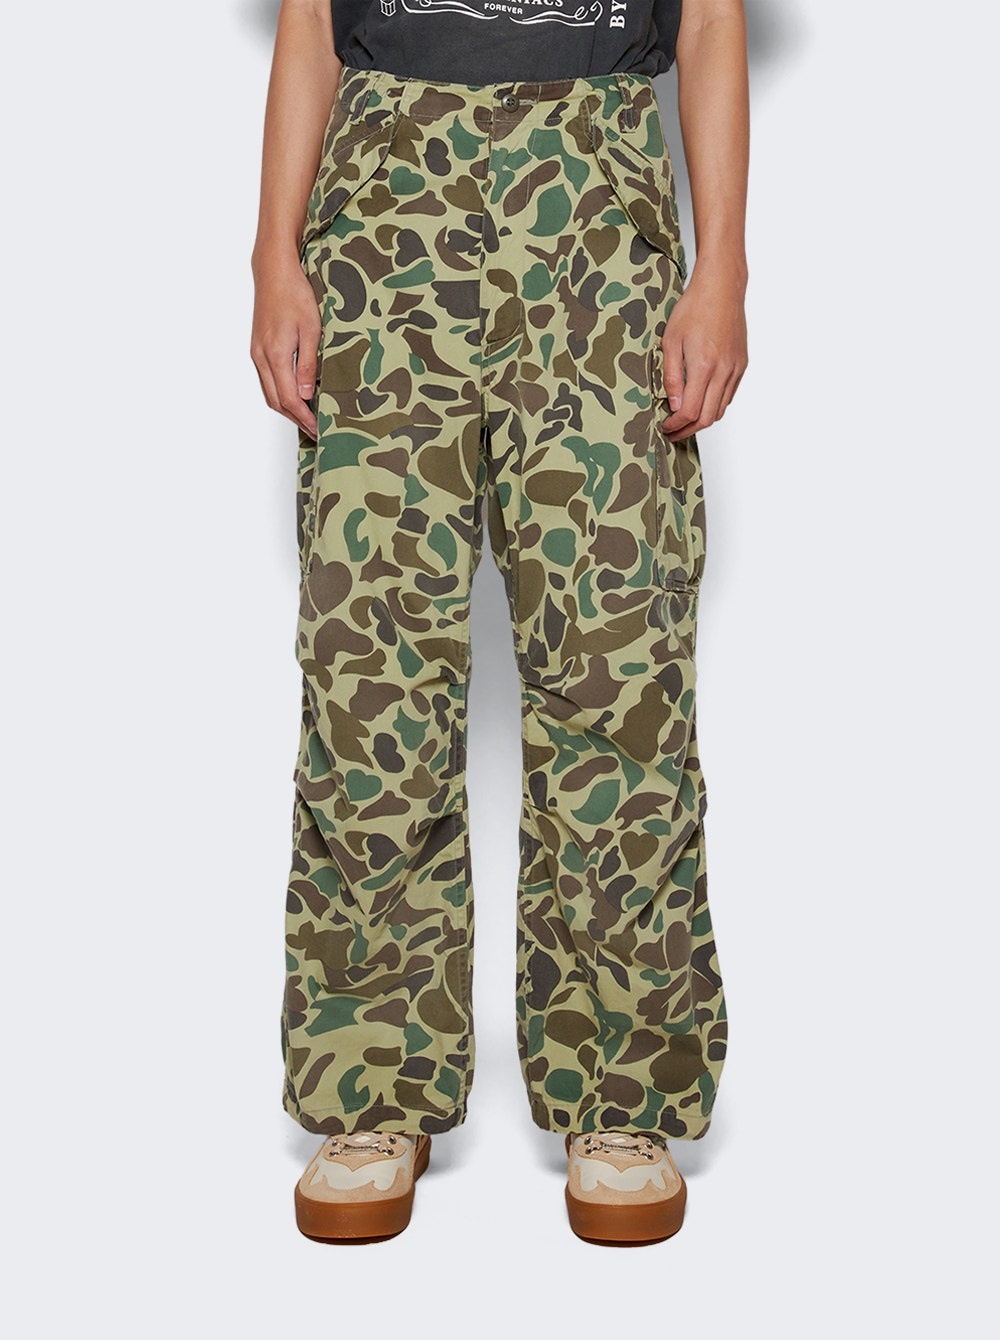 X SHERMER ACADEMY Cargo Pants Camouflage - 3